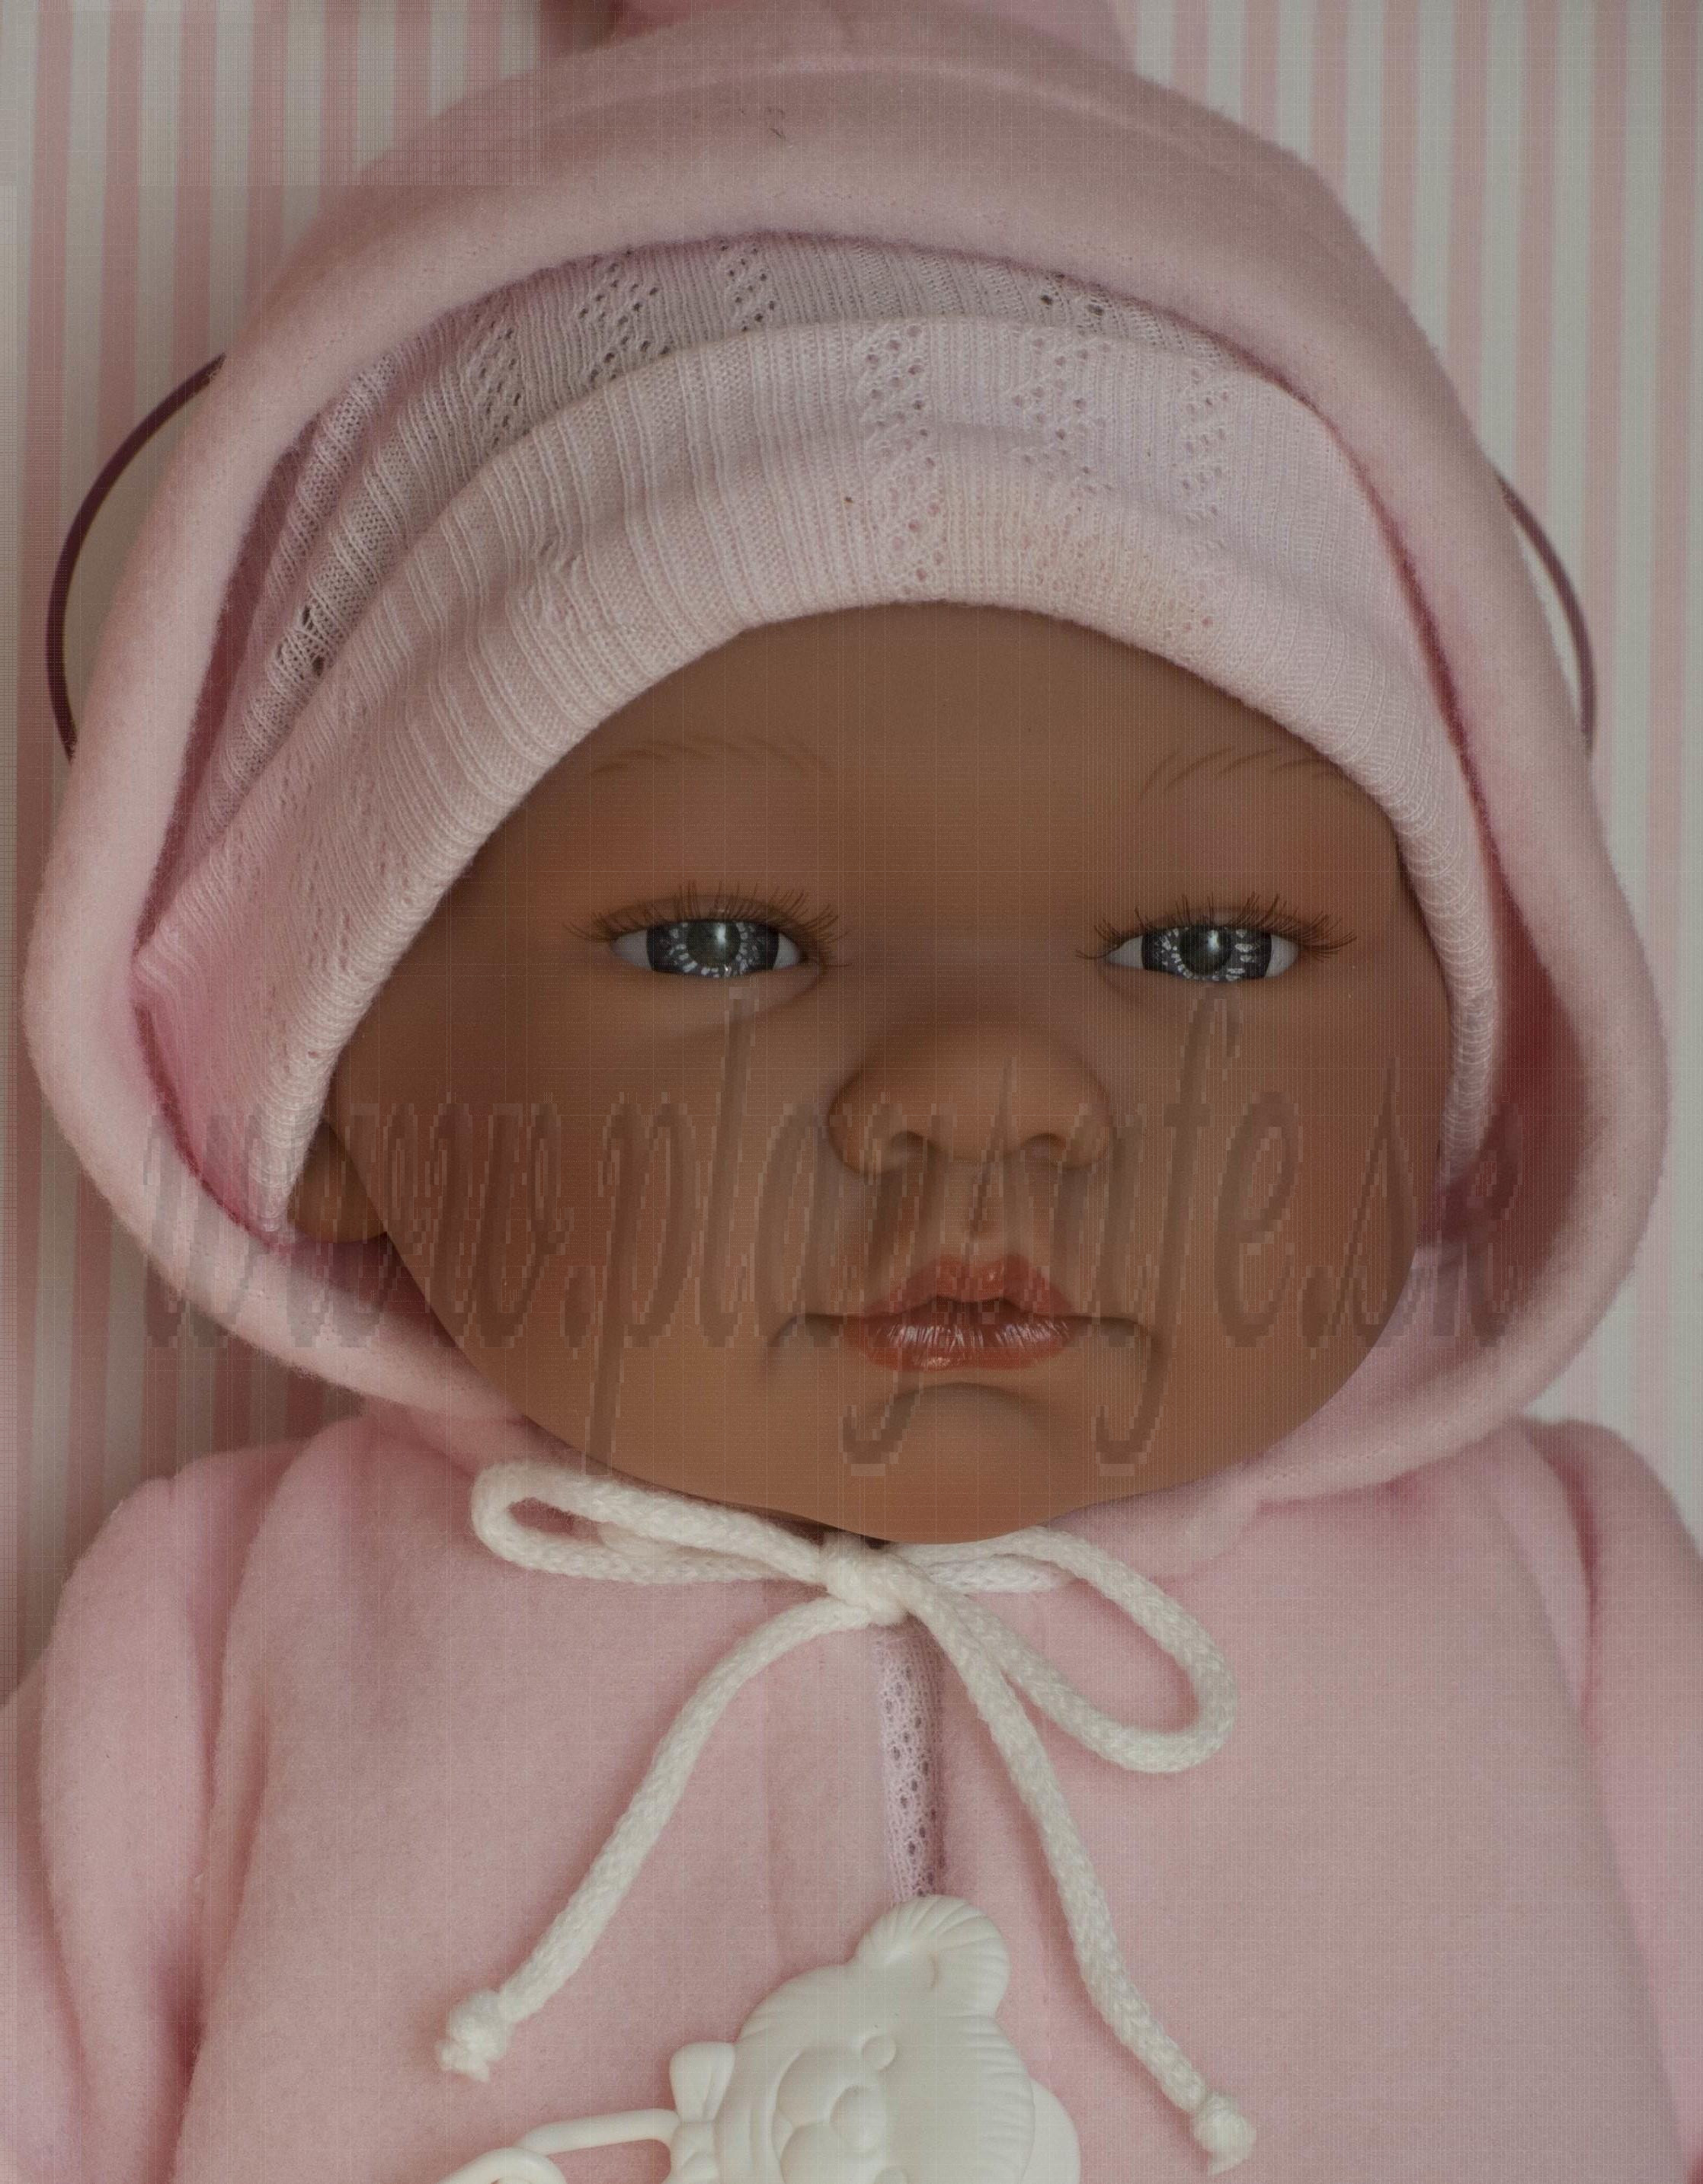 Asivil Baby Doll María, 43cm pink hood